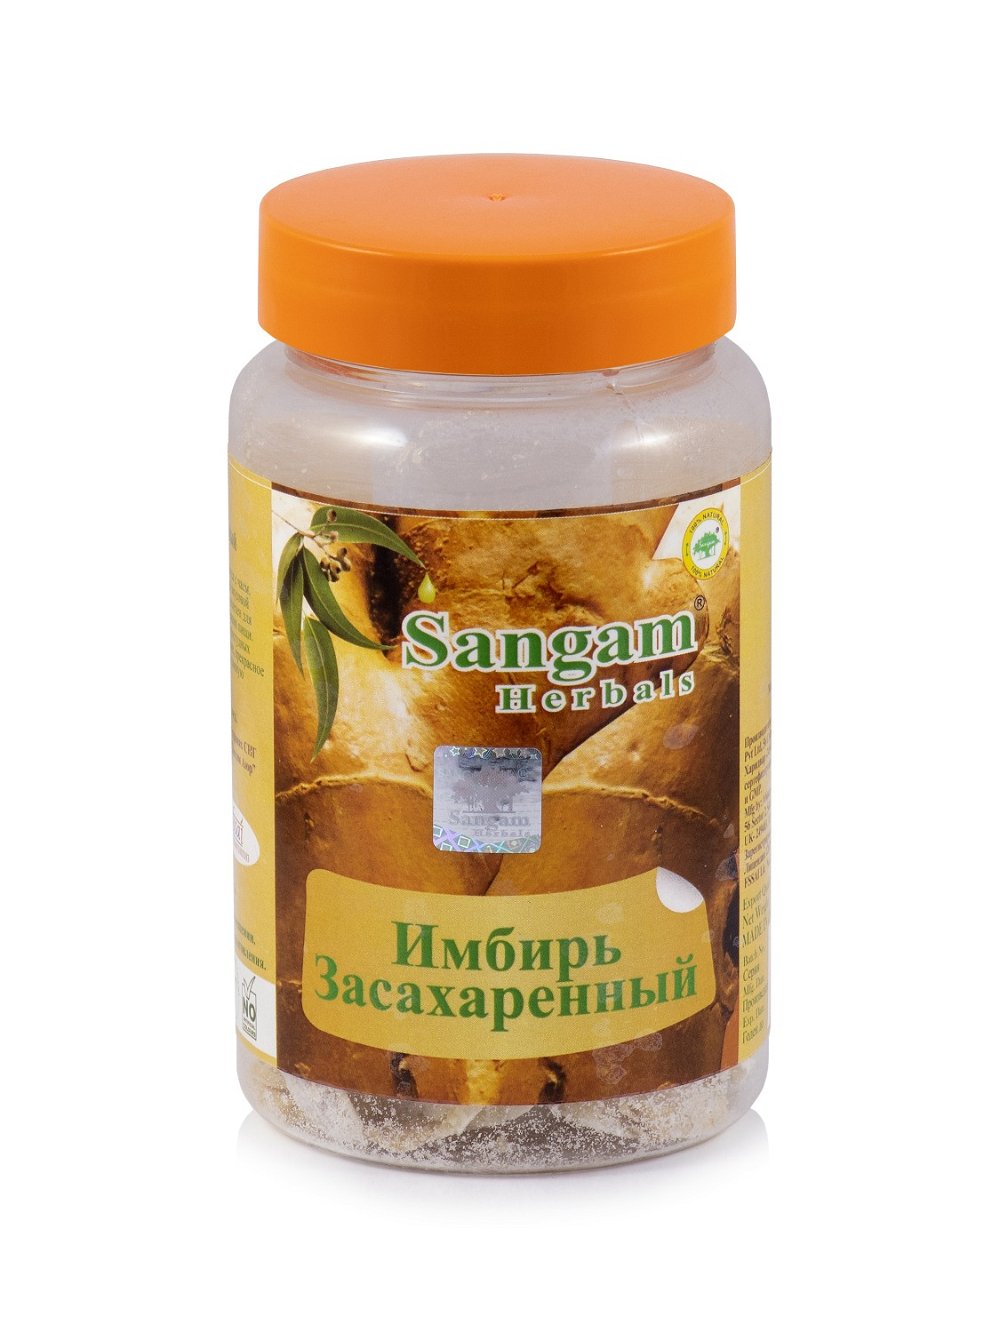 Имбирь засахаренный Sangam Herbals, 50 г, Имбирь засахаренный 50г